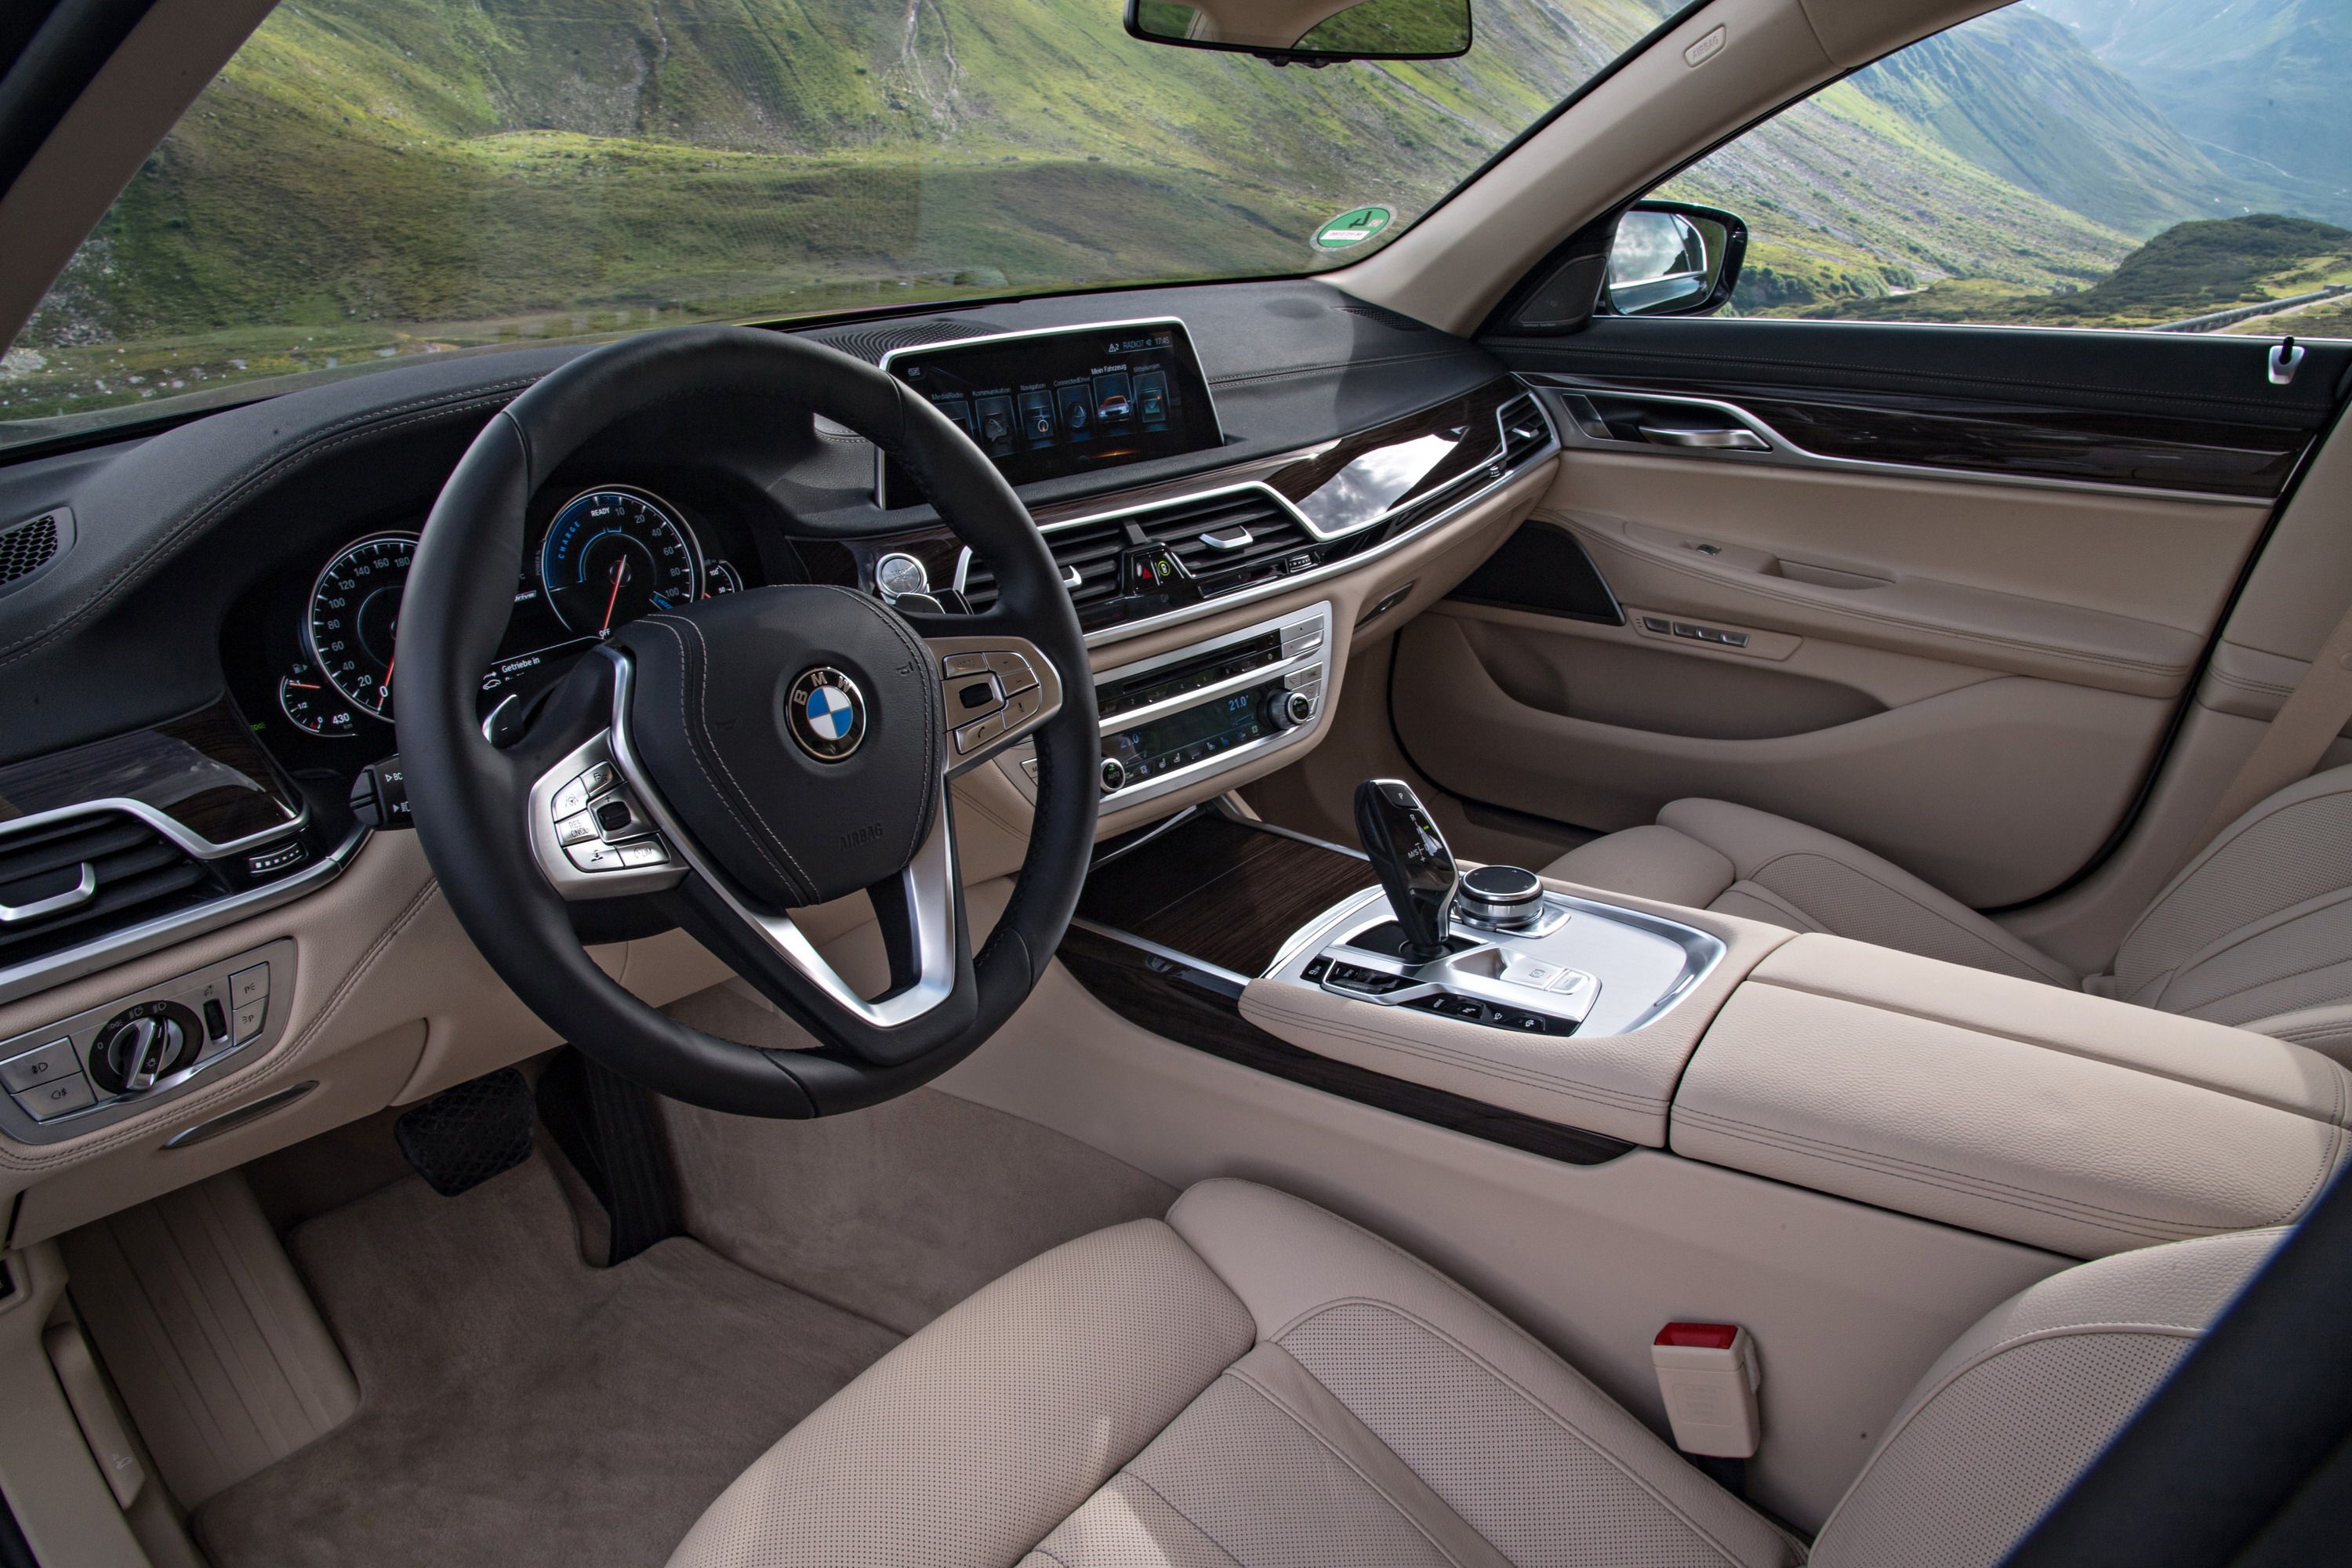 2017 BMW 740e iPerformance